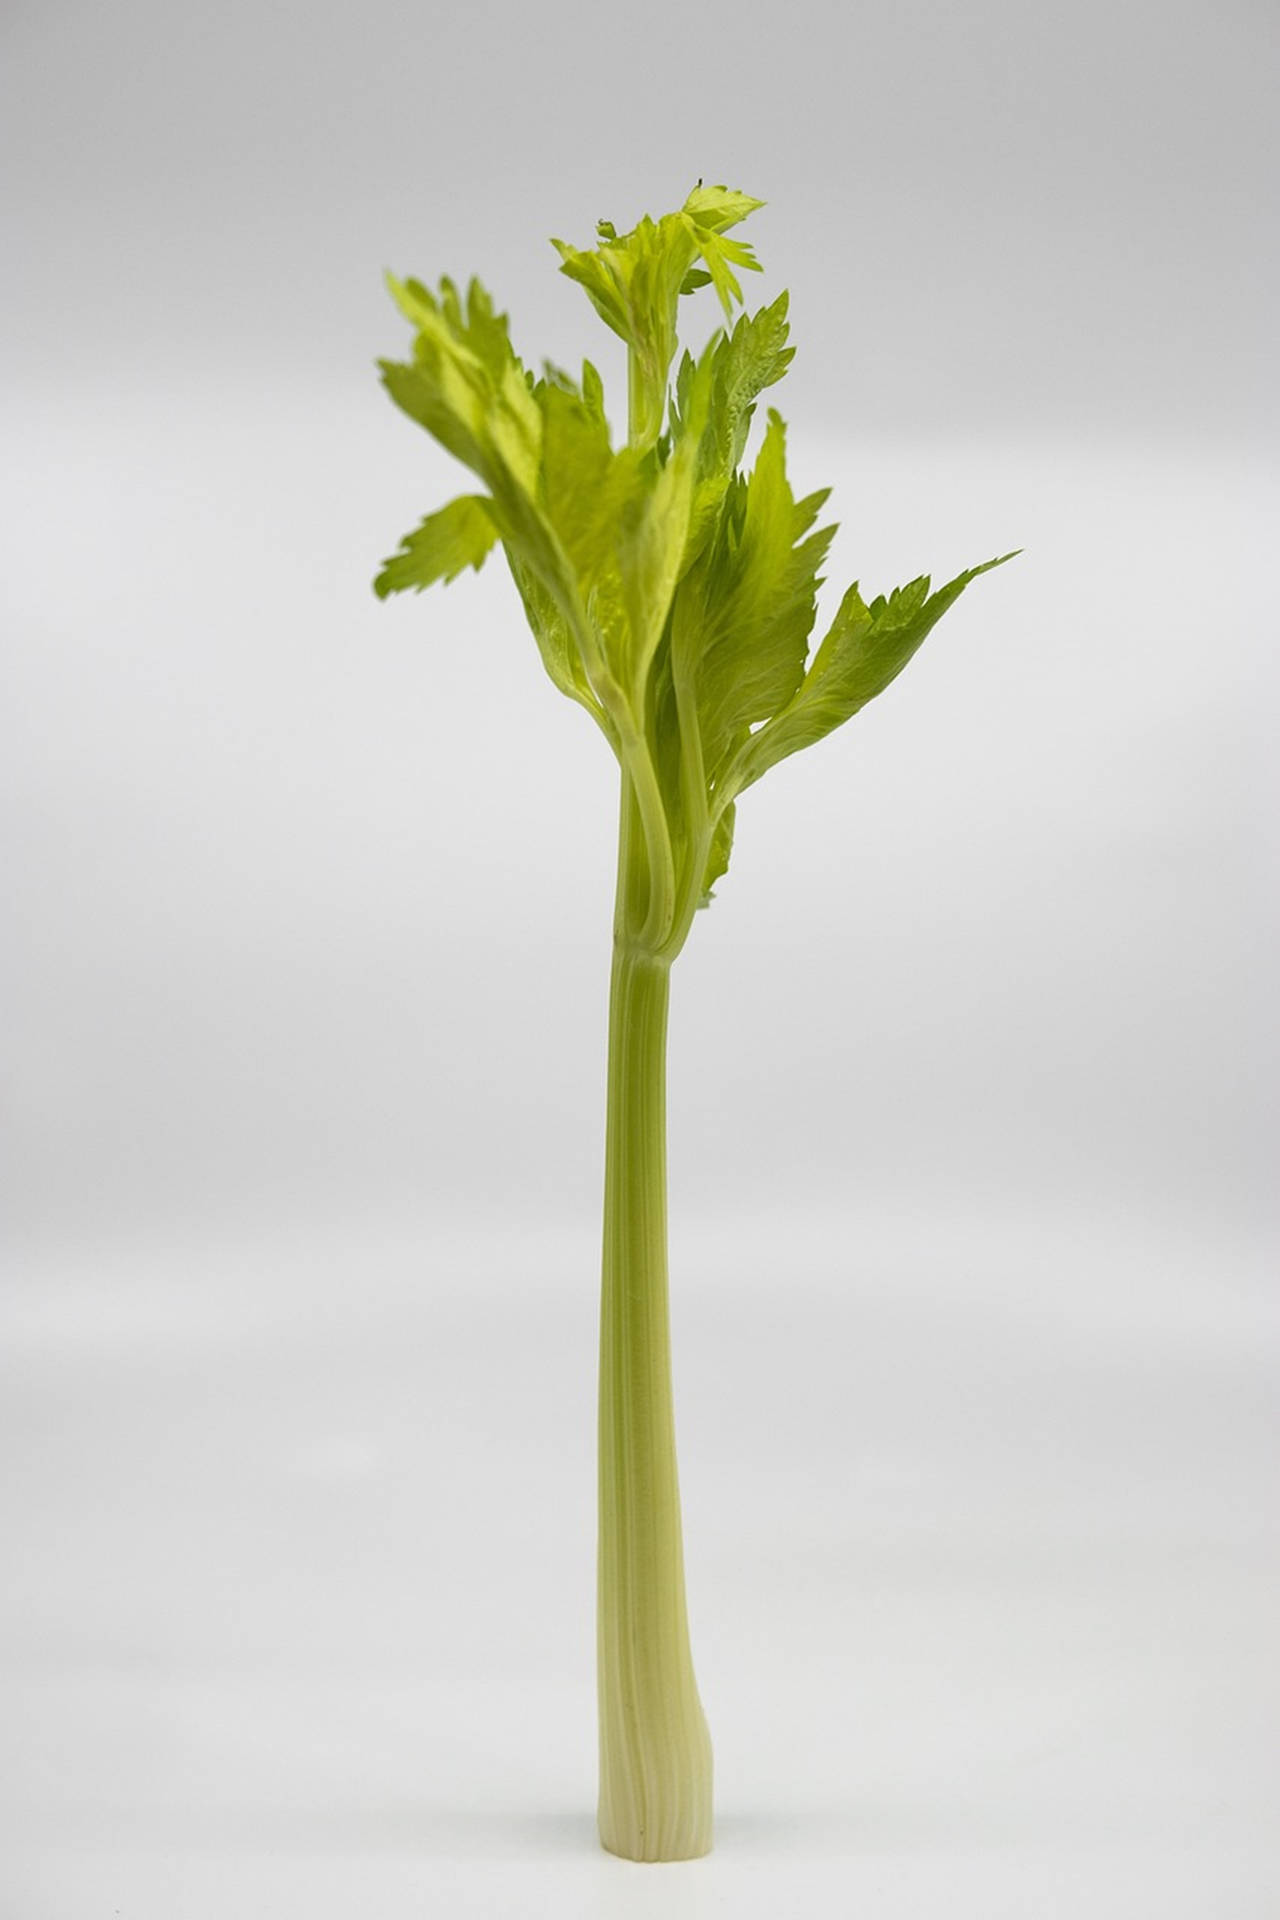 Crisp and Green - A Upright Celery Stalk Wallpaper